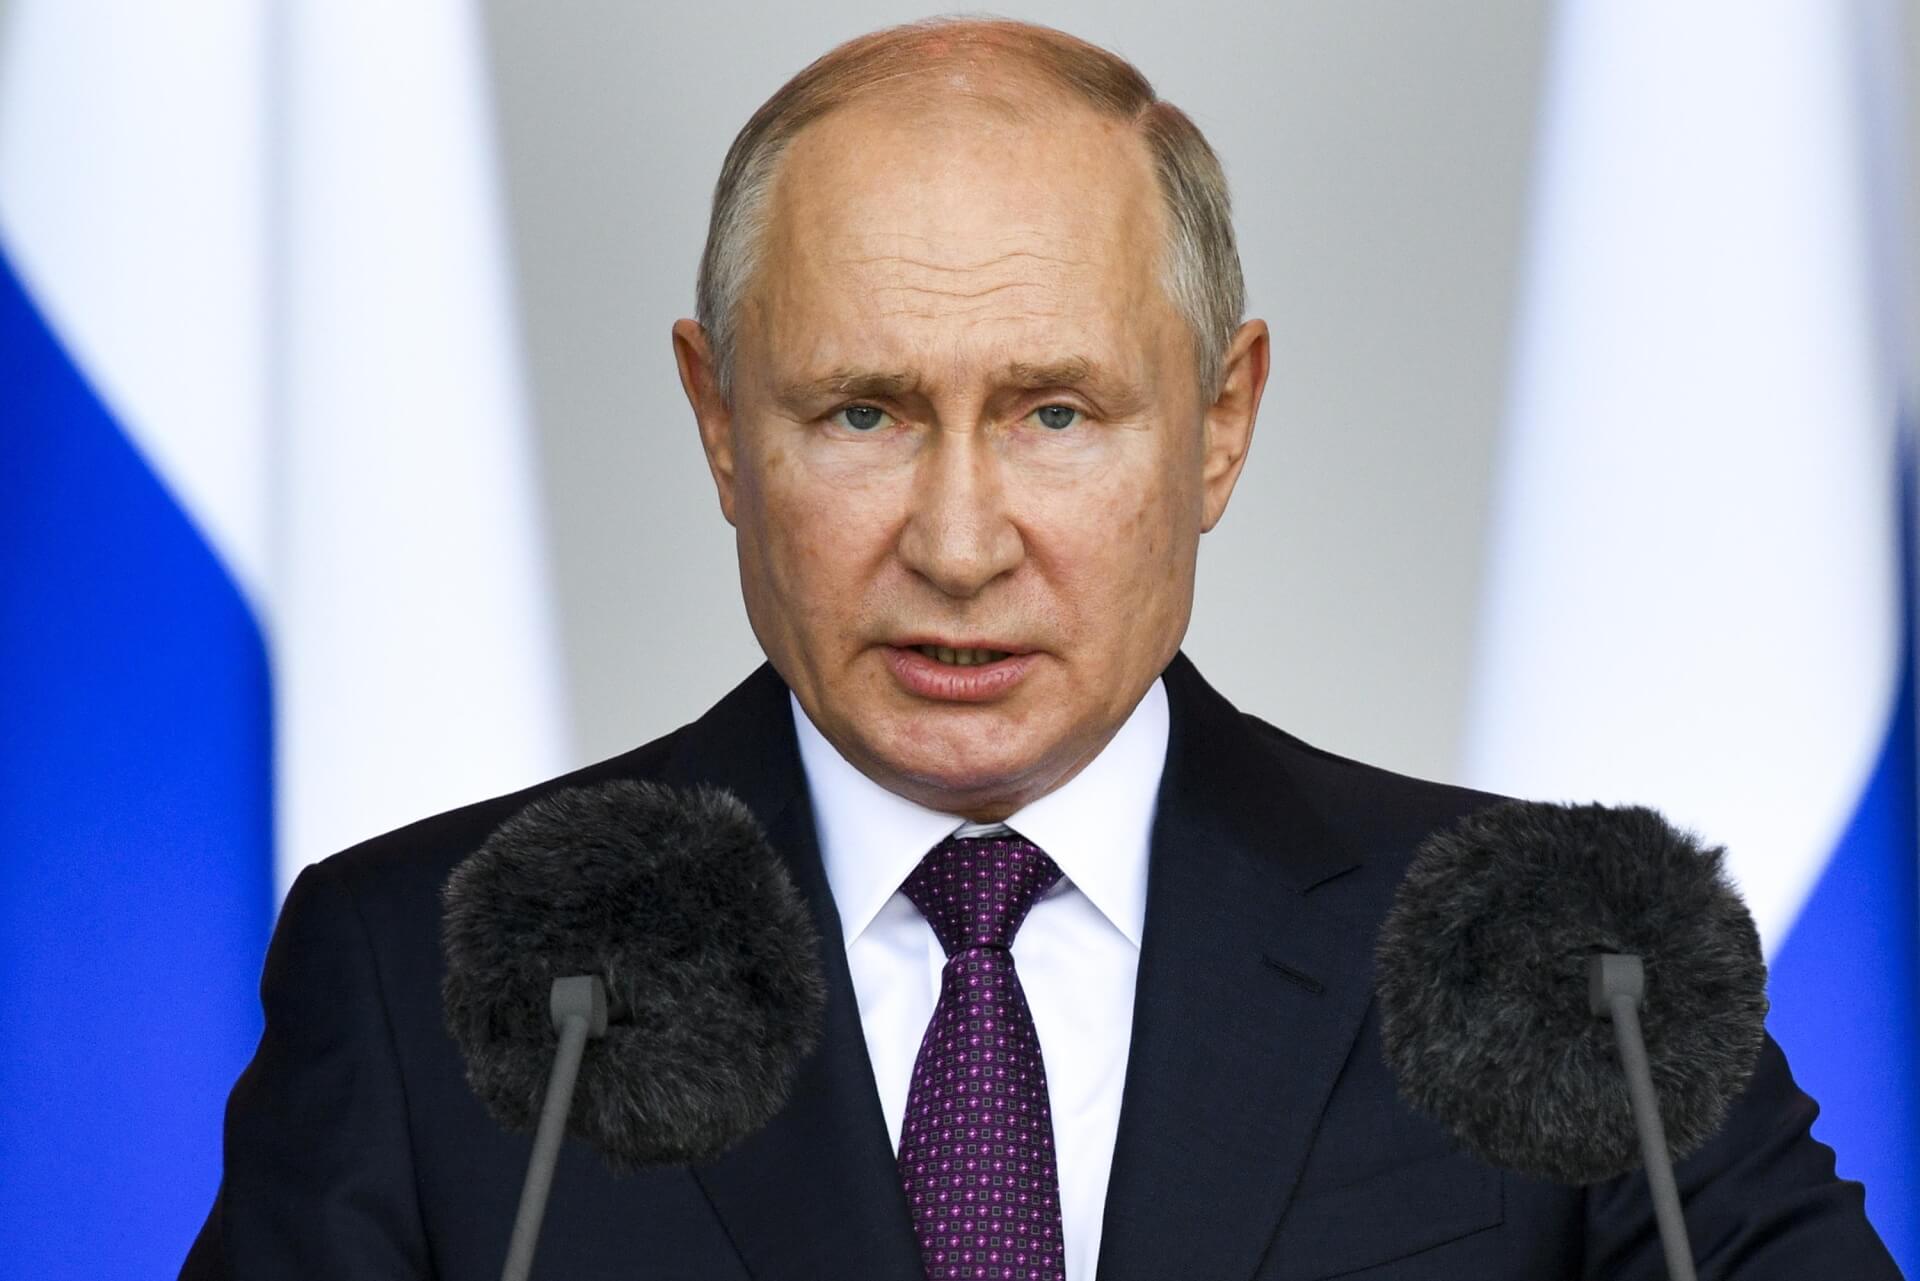 Putin Warns Belarus Over EU Gas Threat, Denies Any Russian Involvement in Border Crisis